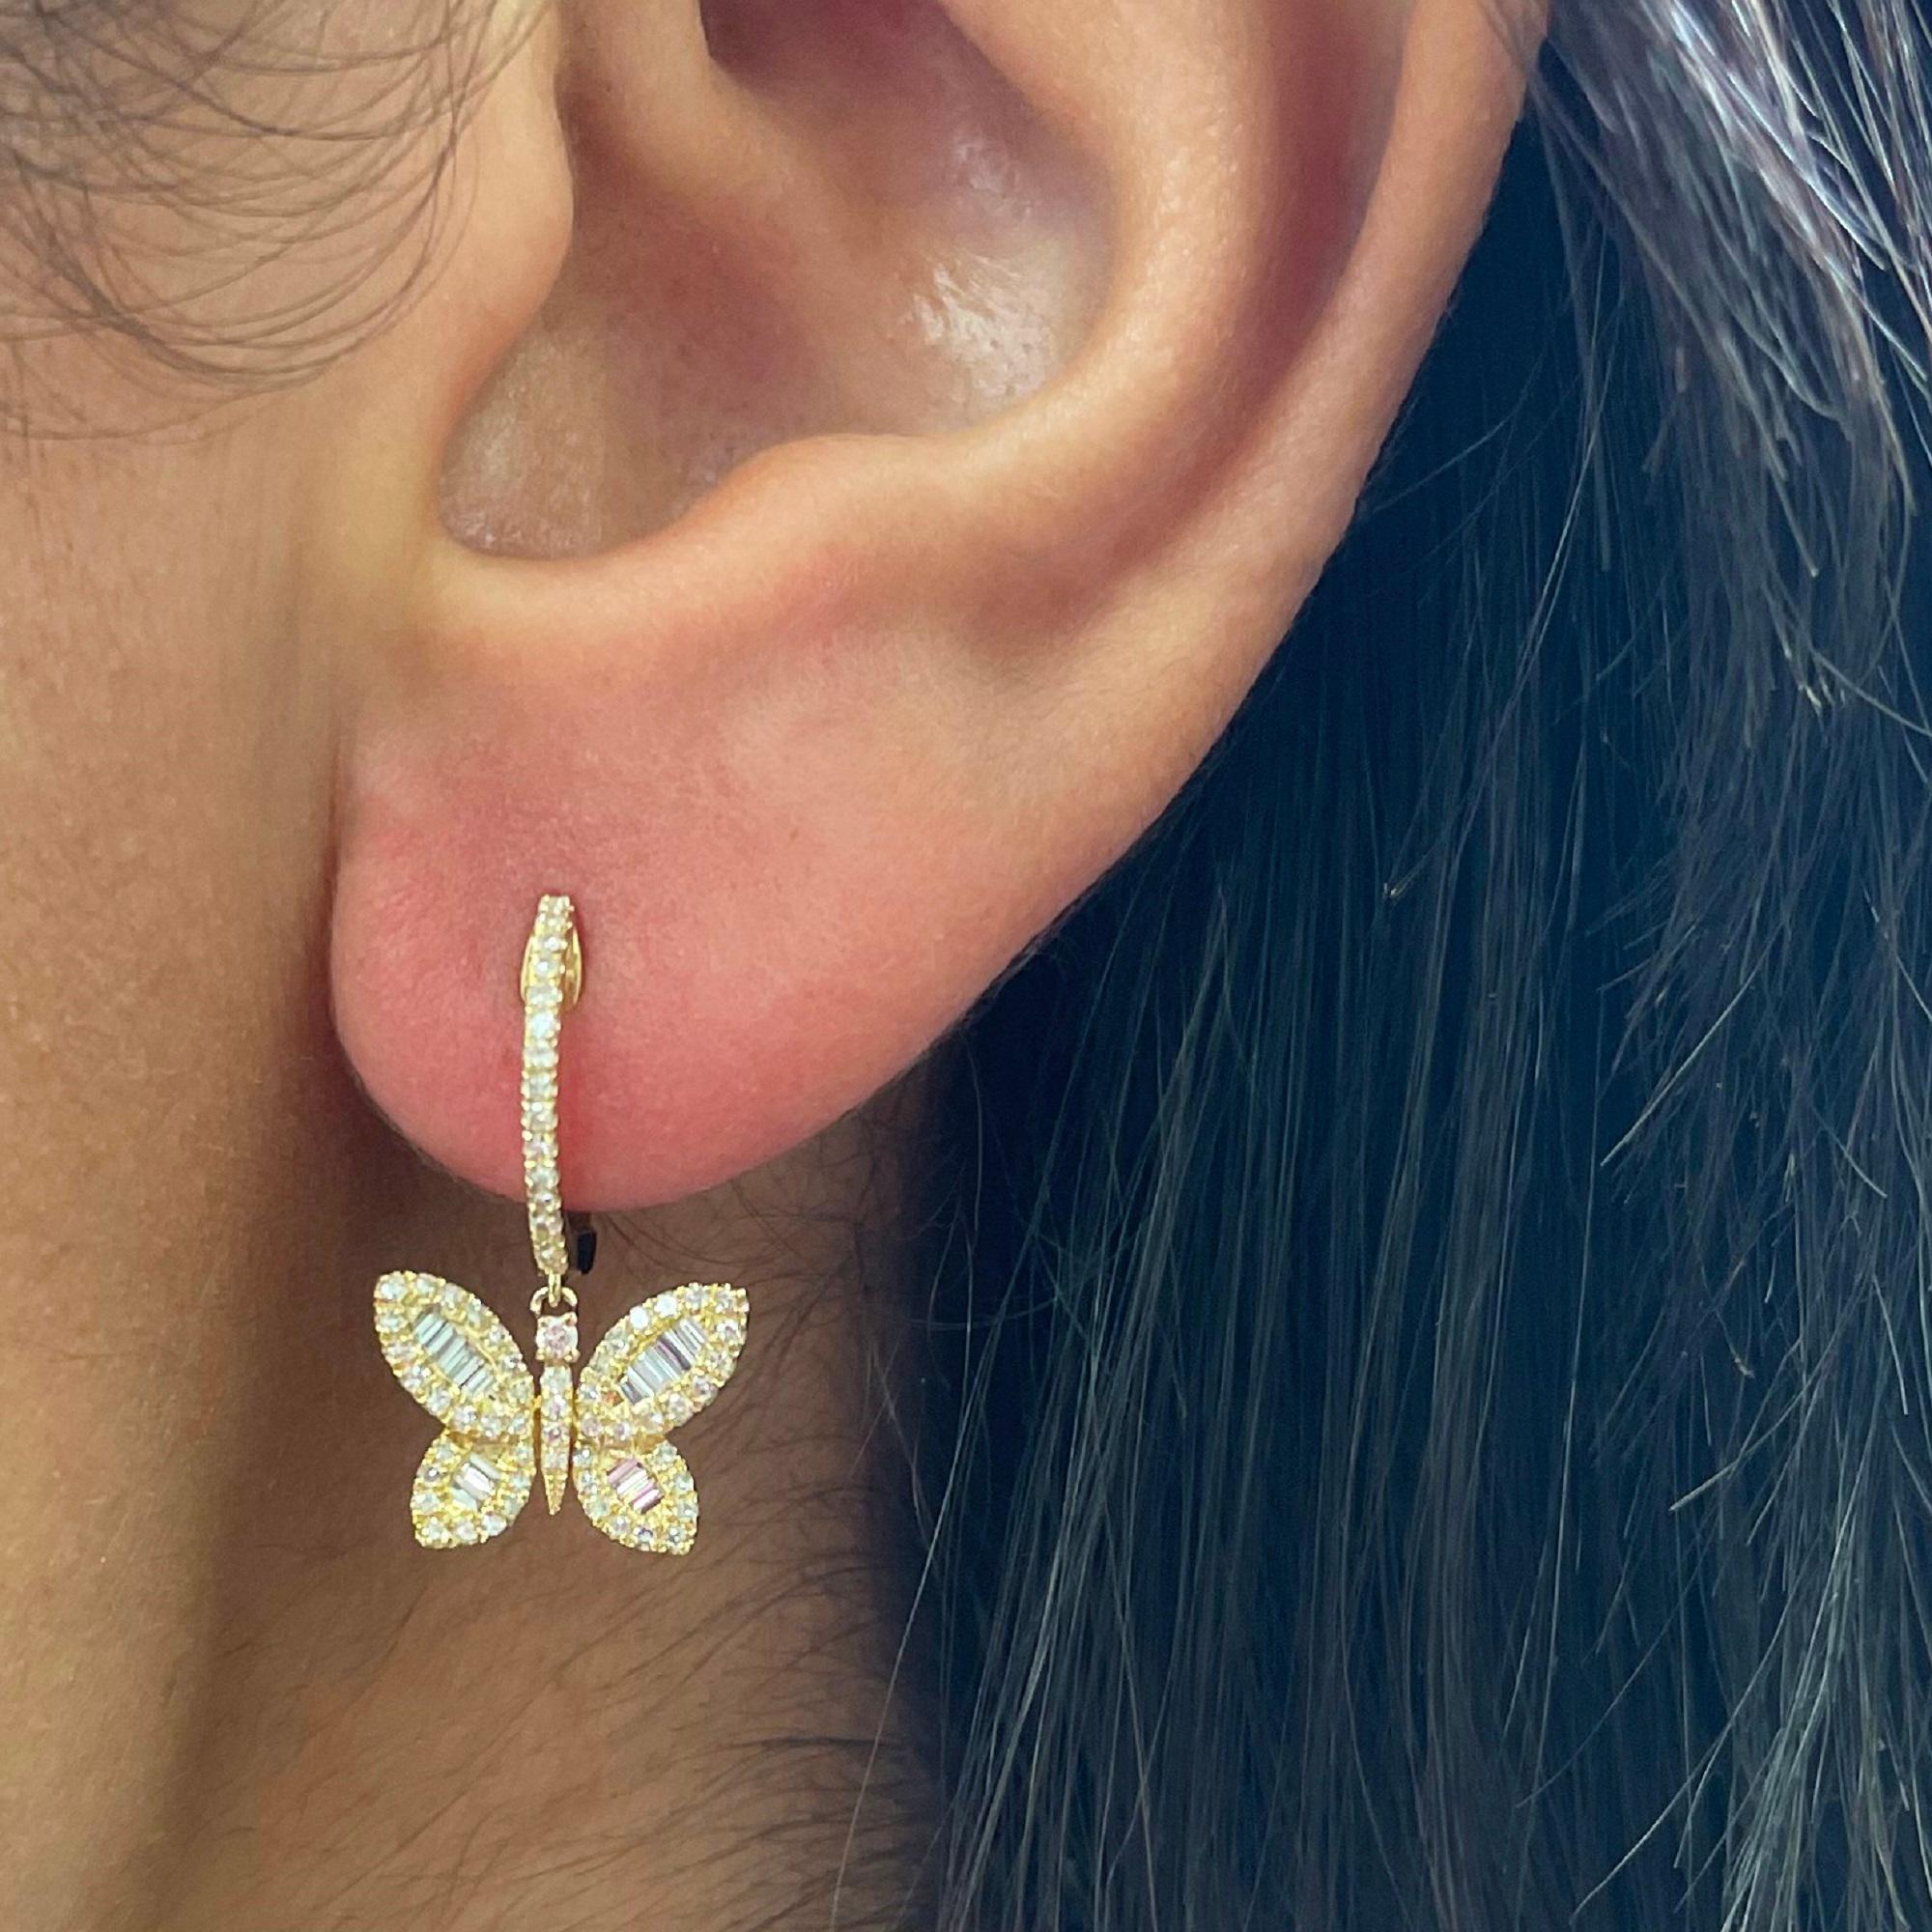 14k Gold & Baguette Diamond Butterfly Dangle Earrings

Earring Drop: 1 inch
Baguette Diamond Weight: 0.19 ct.
Baguette Diamond Count: 26
Round Diamond Weight: 0.67 ct.
Round Diamond Count: 26
Gold Weight: 2.6 grams (approx.)
This piece is perfect